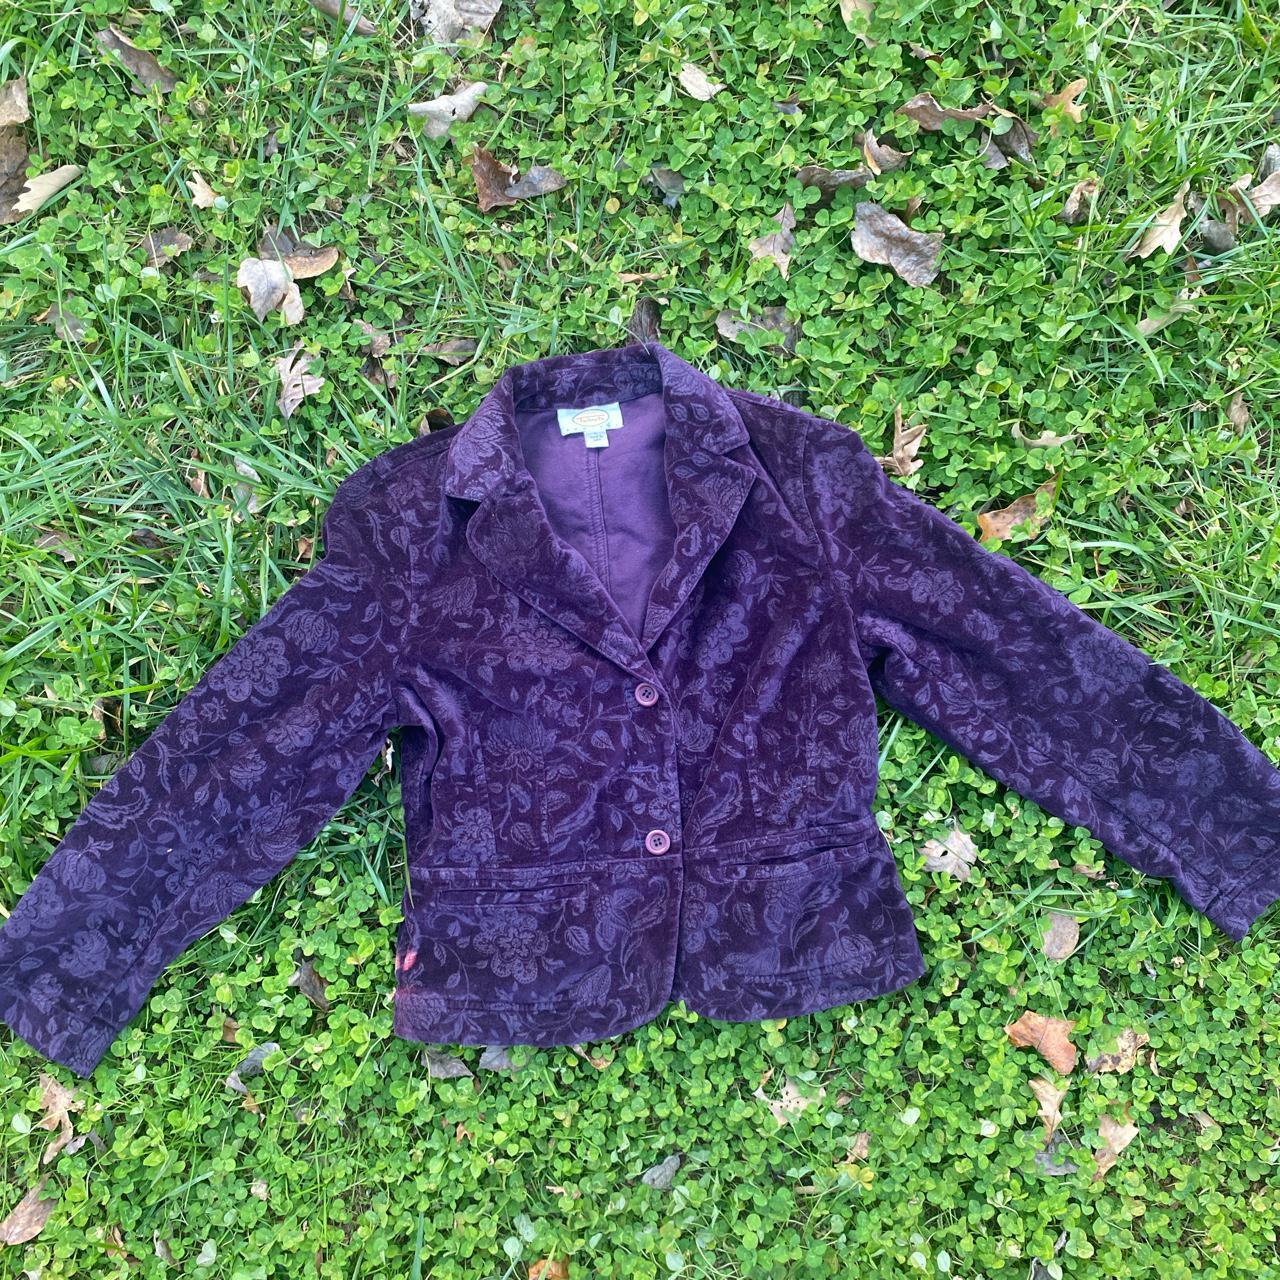 Product Image 1 - Purple velvet jacket has a